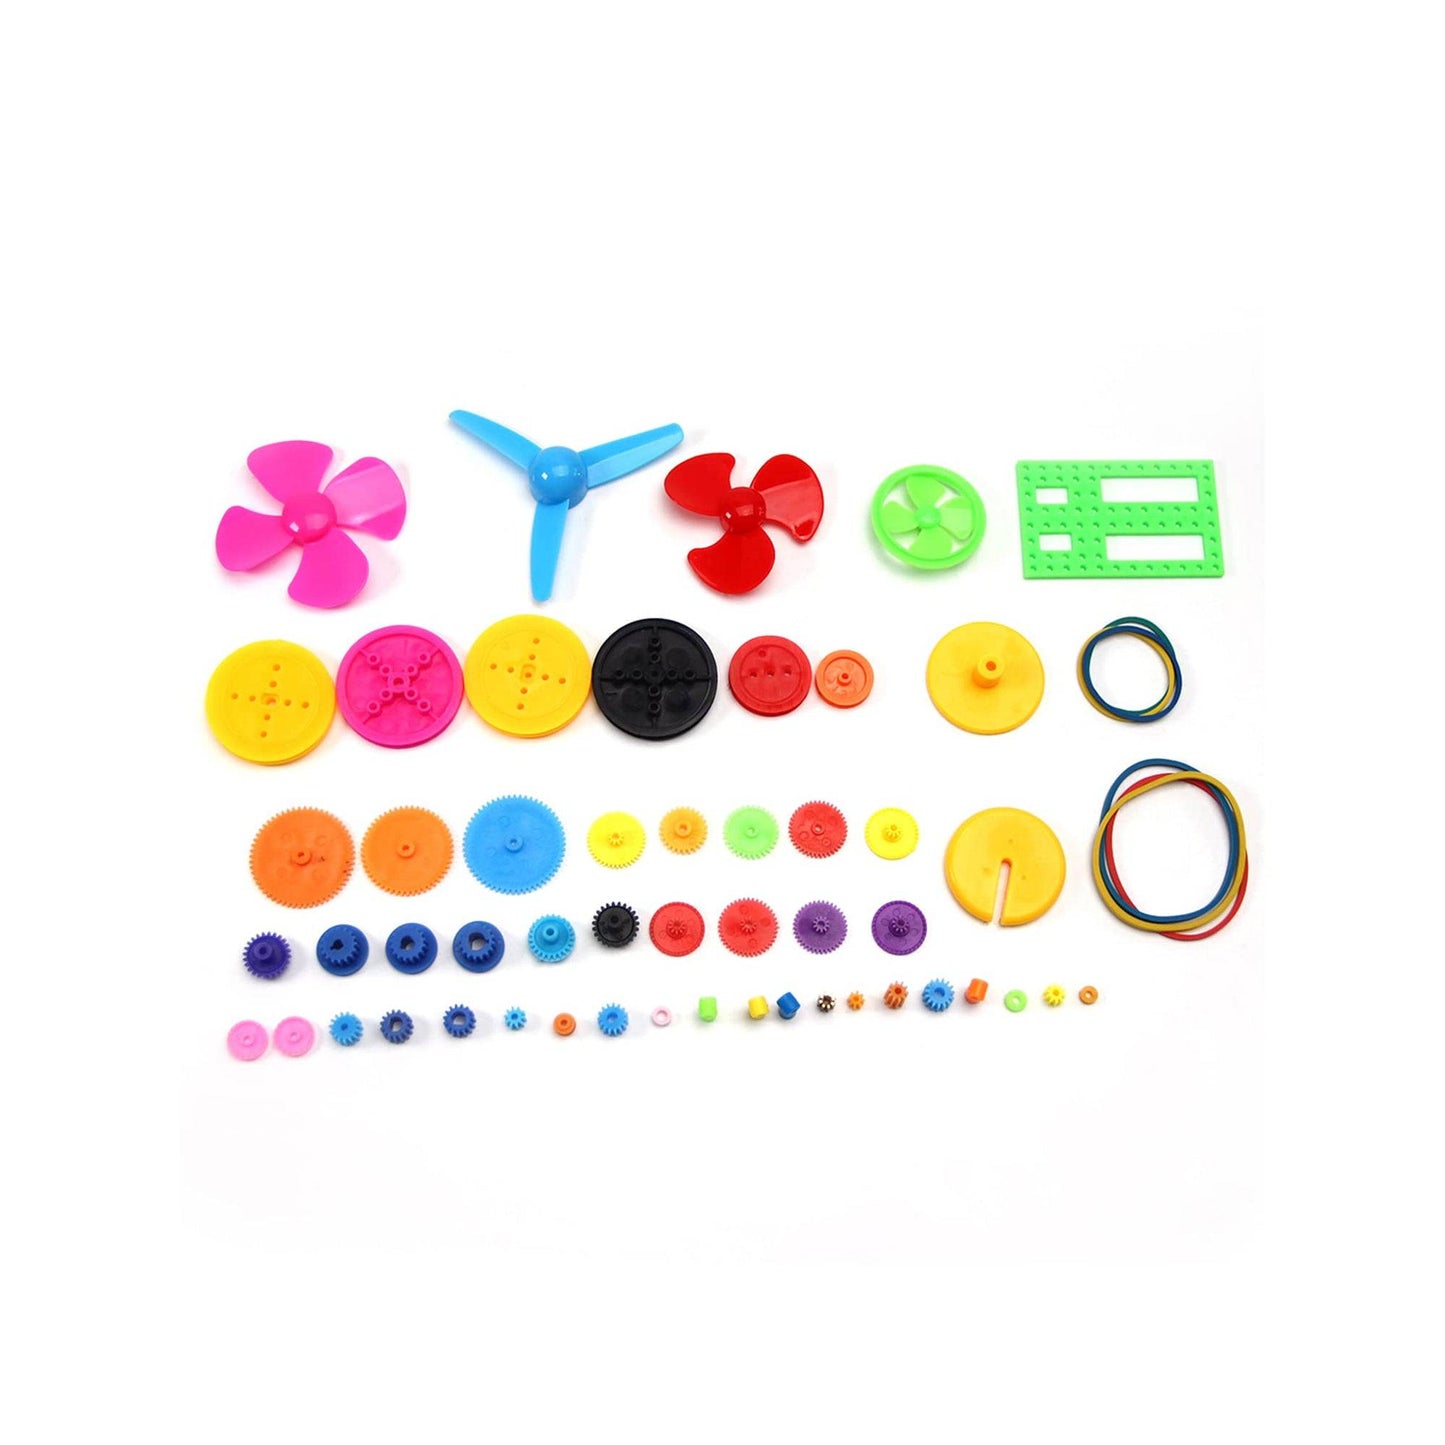 Plastic Motor Gear Assortment Kit Colorful Plastic